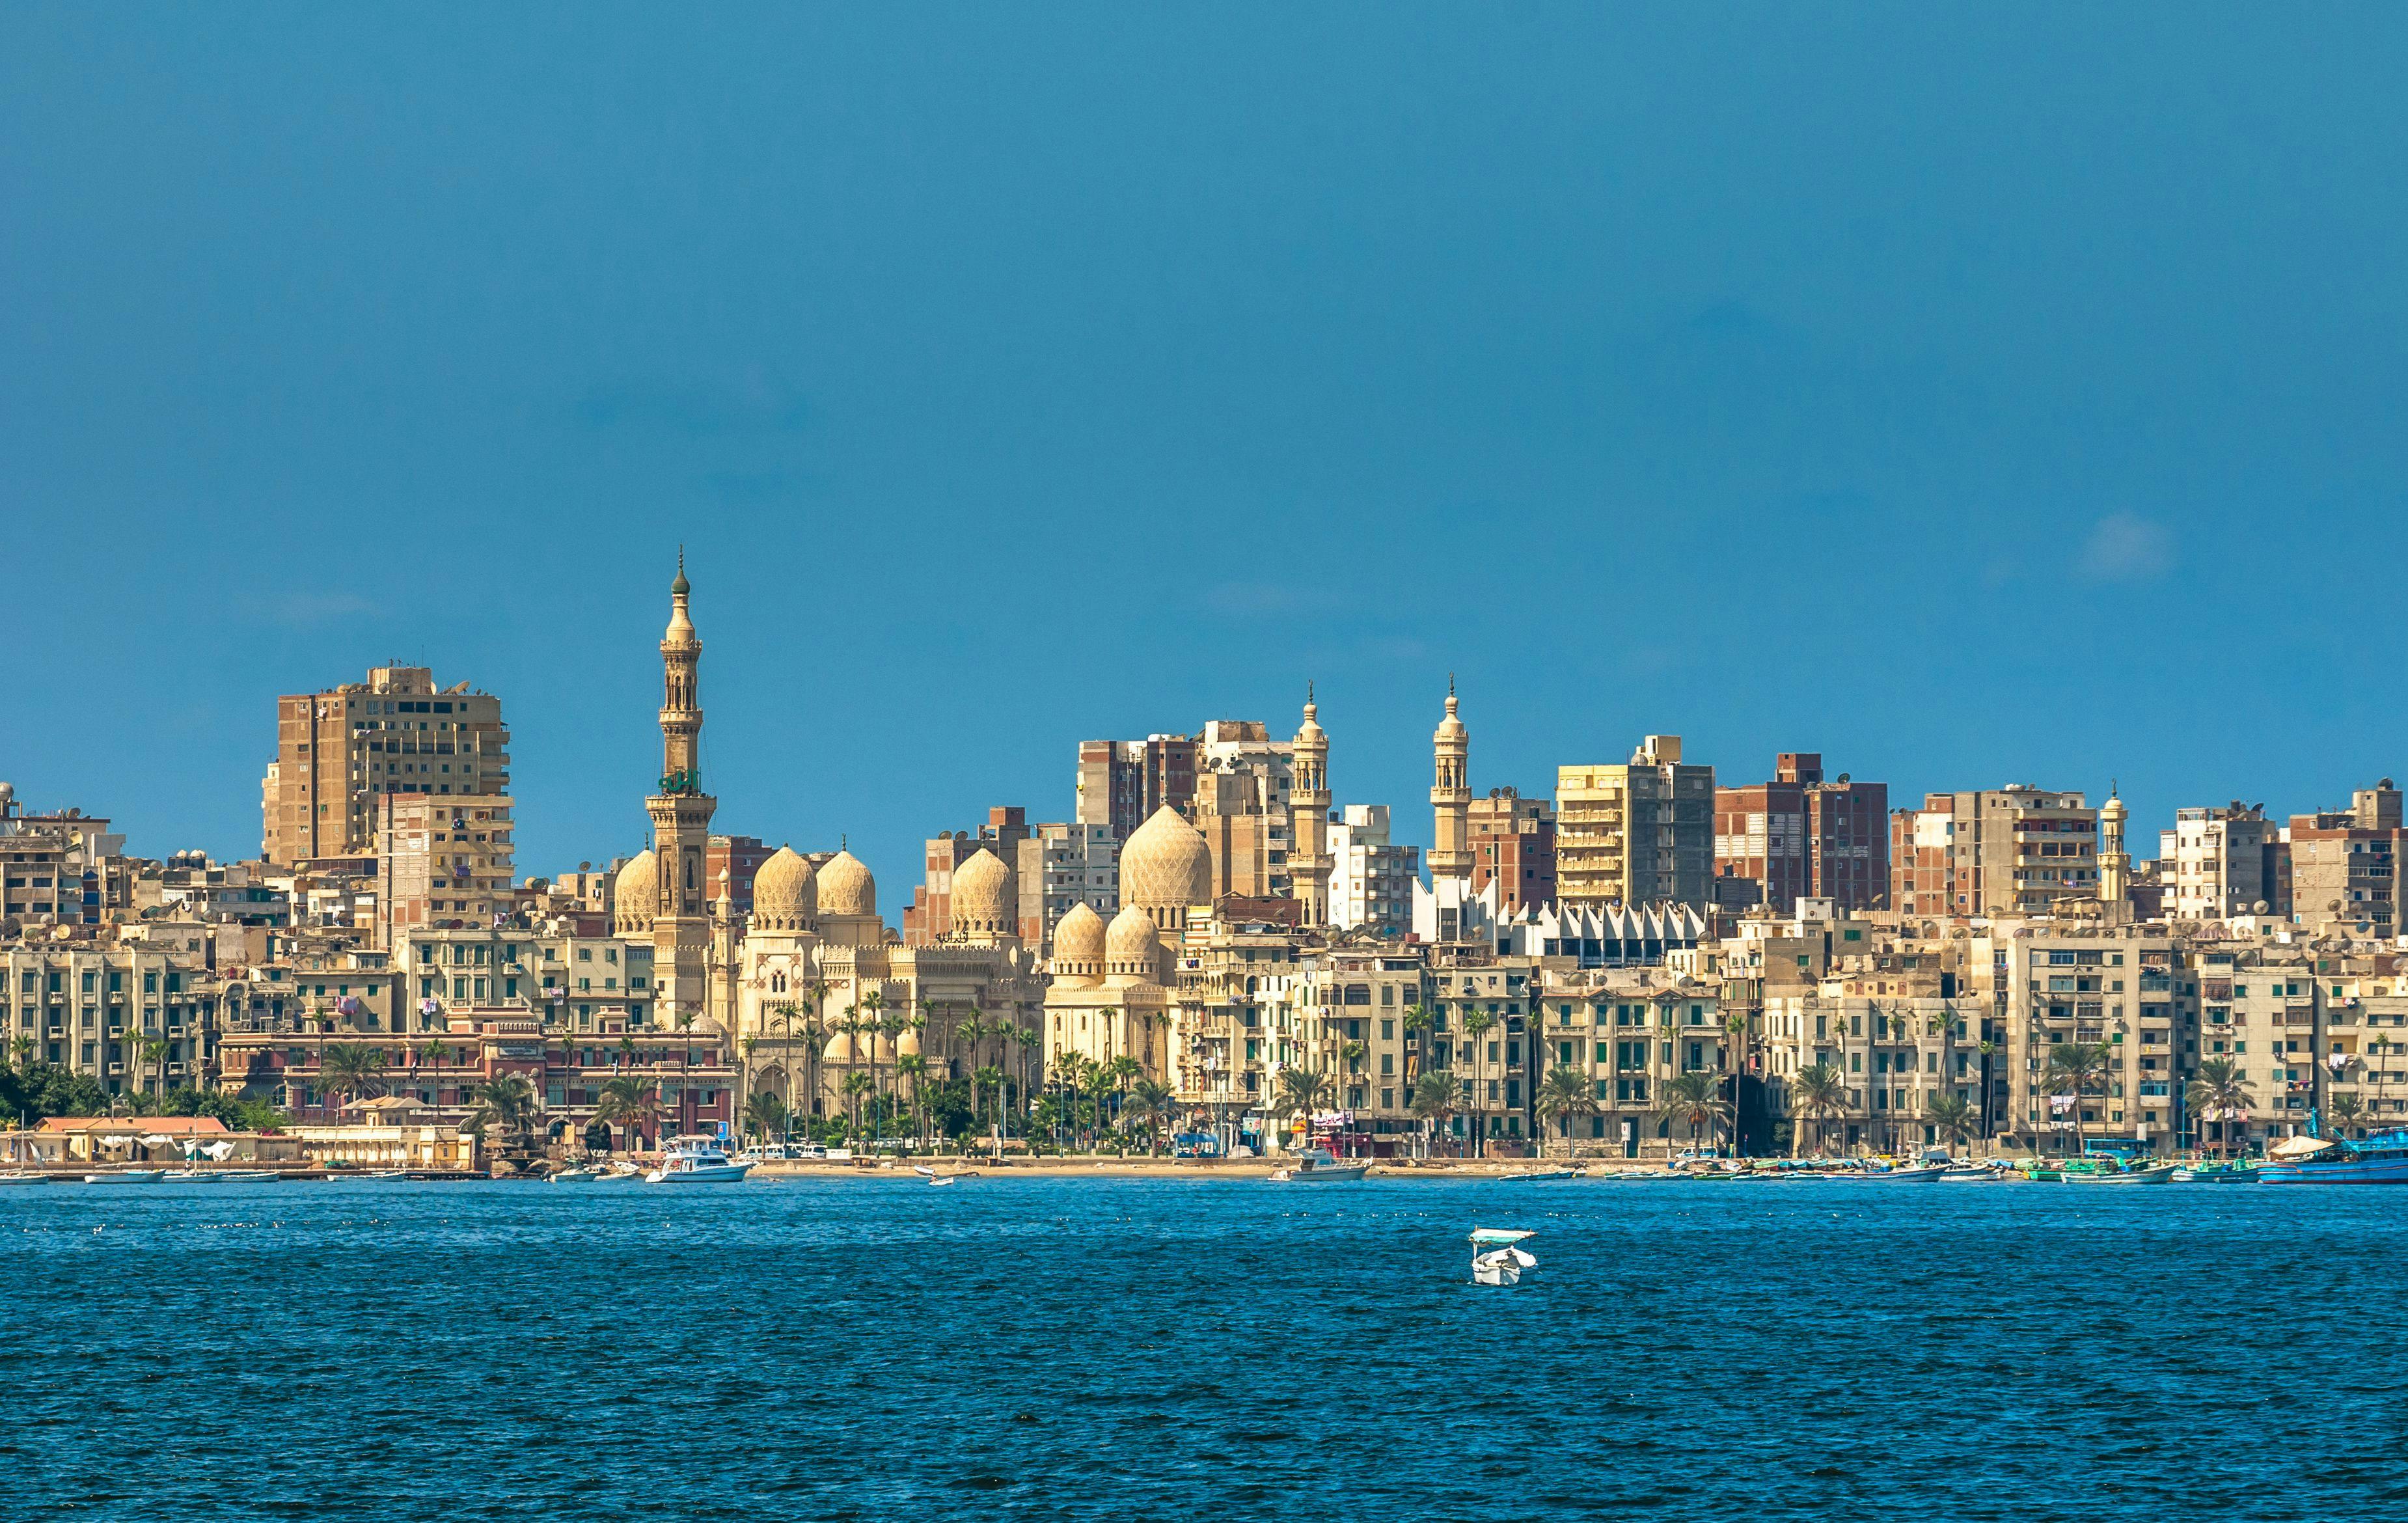 View of Alexandria harbor, Egypt | Image Credit: © javarman - stock.adobe.com